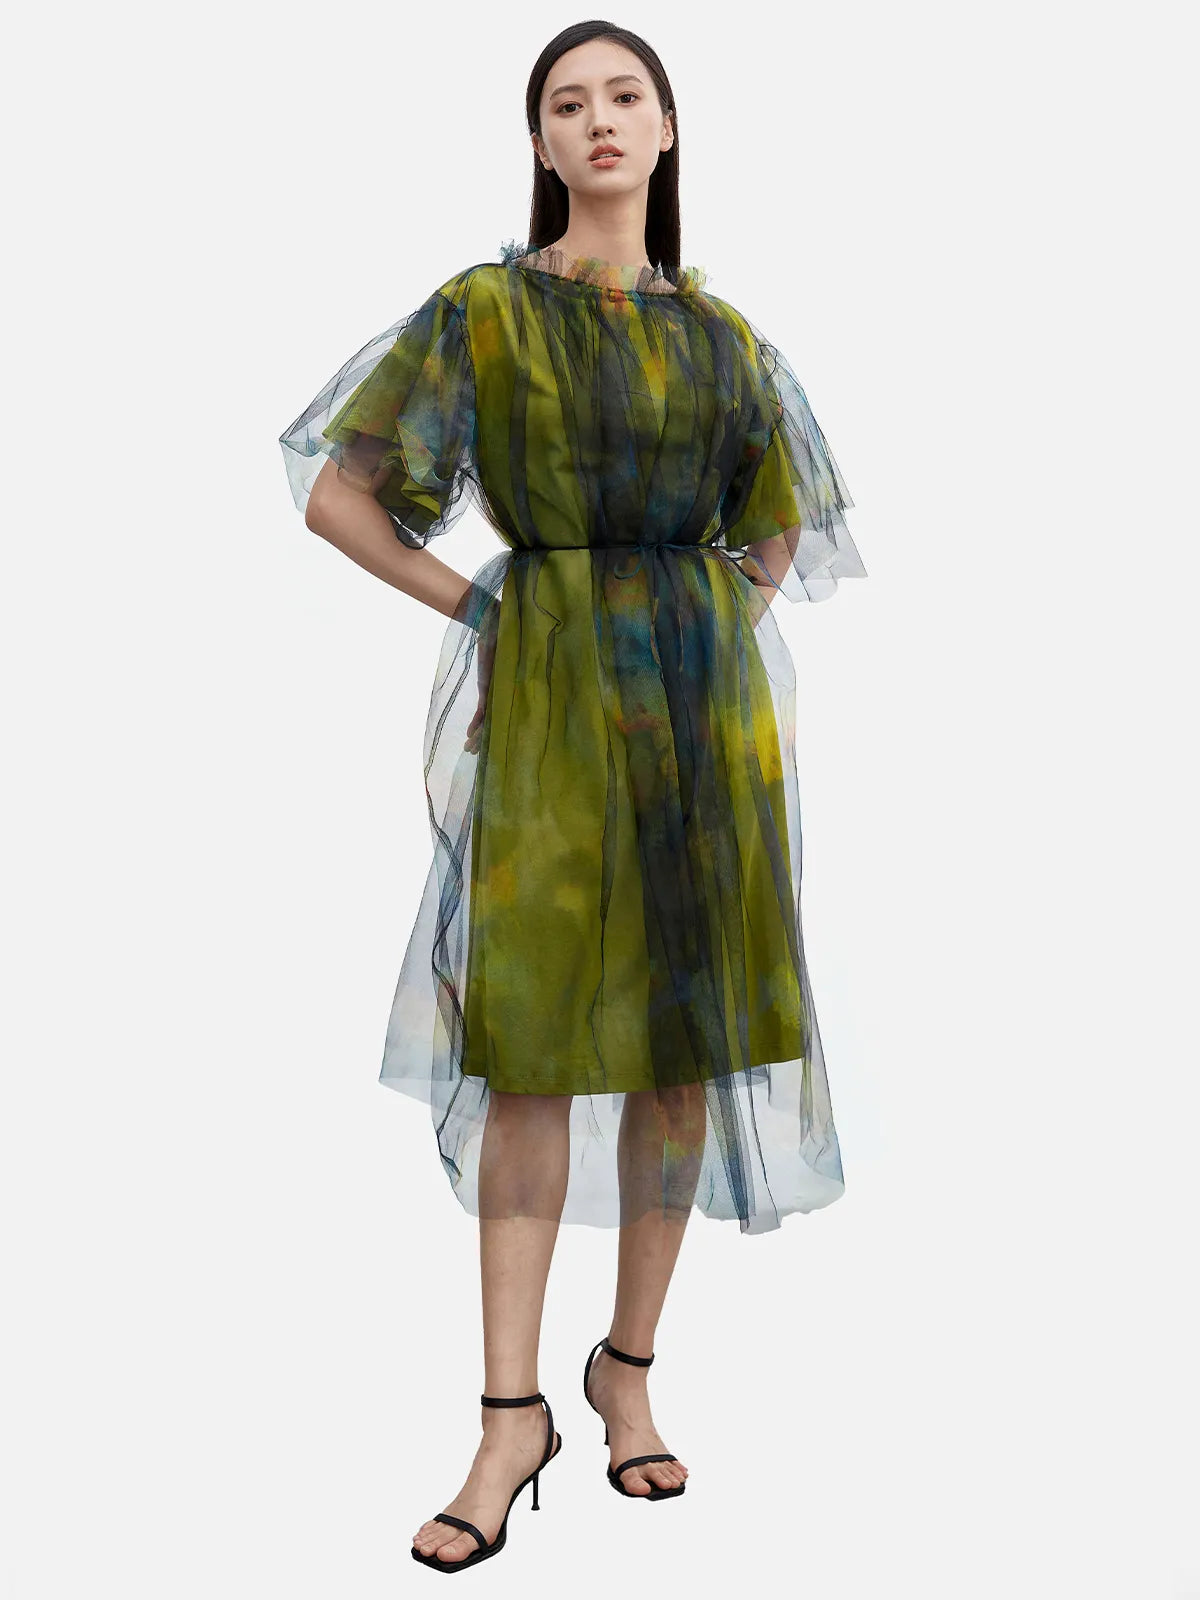 Smudged Short-sleeved A-line Mesh Dress